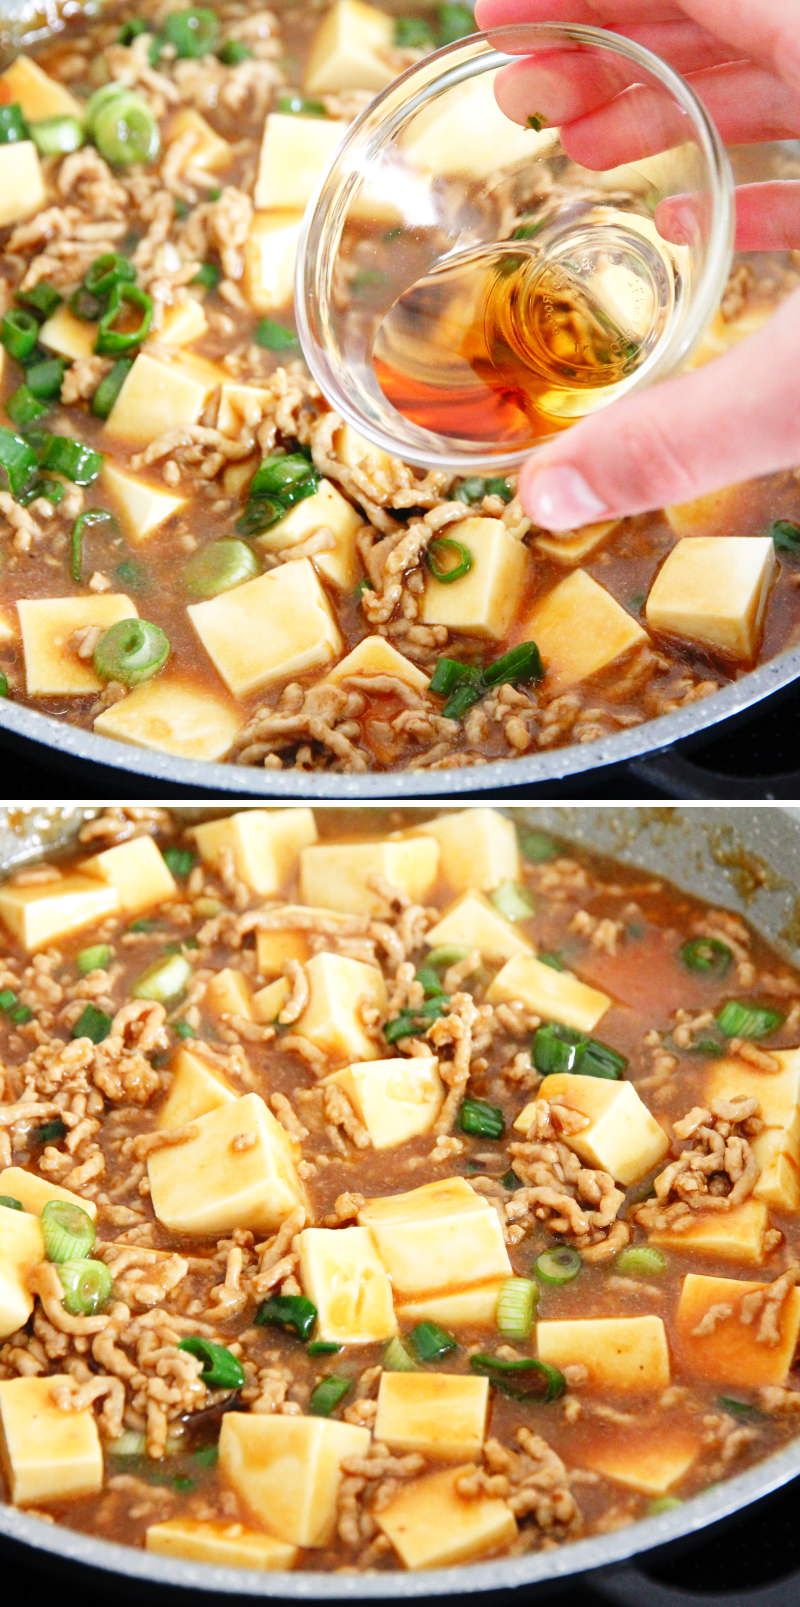 Mapo Tofu Schritt 12 mit Sesam würzen